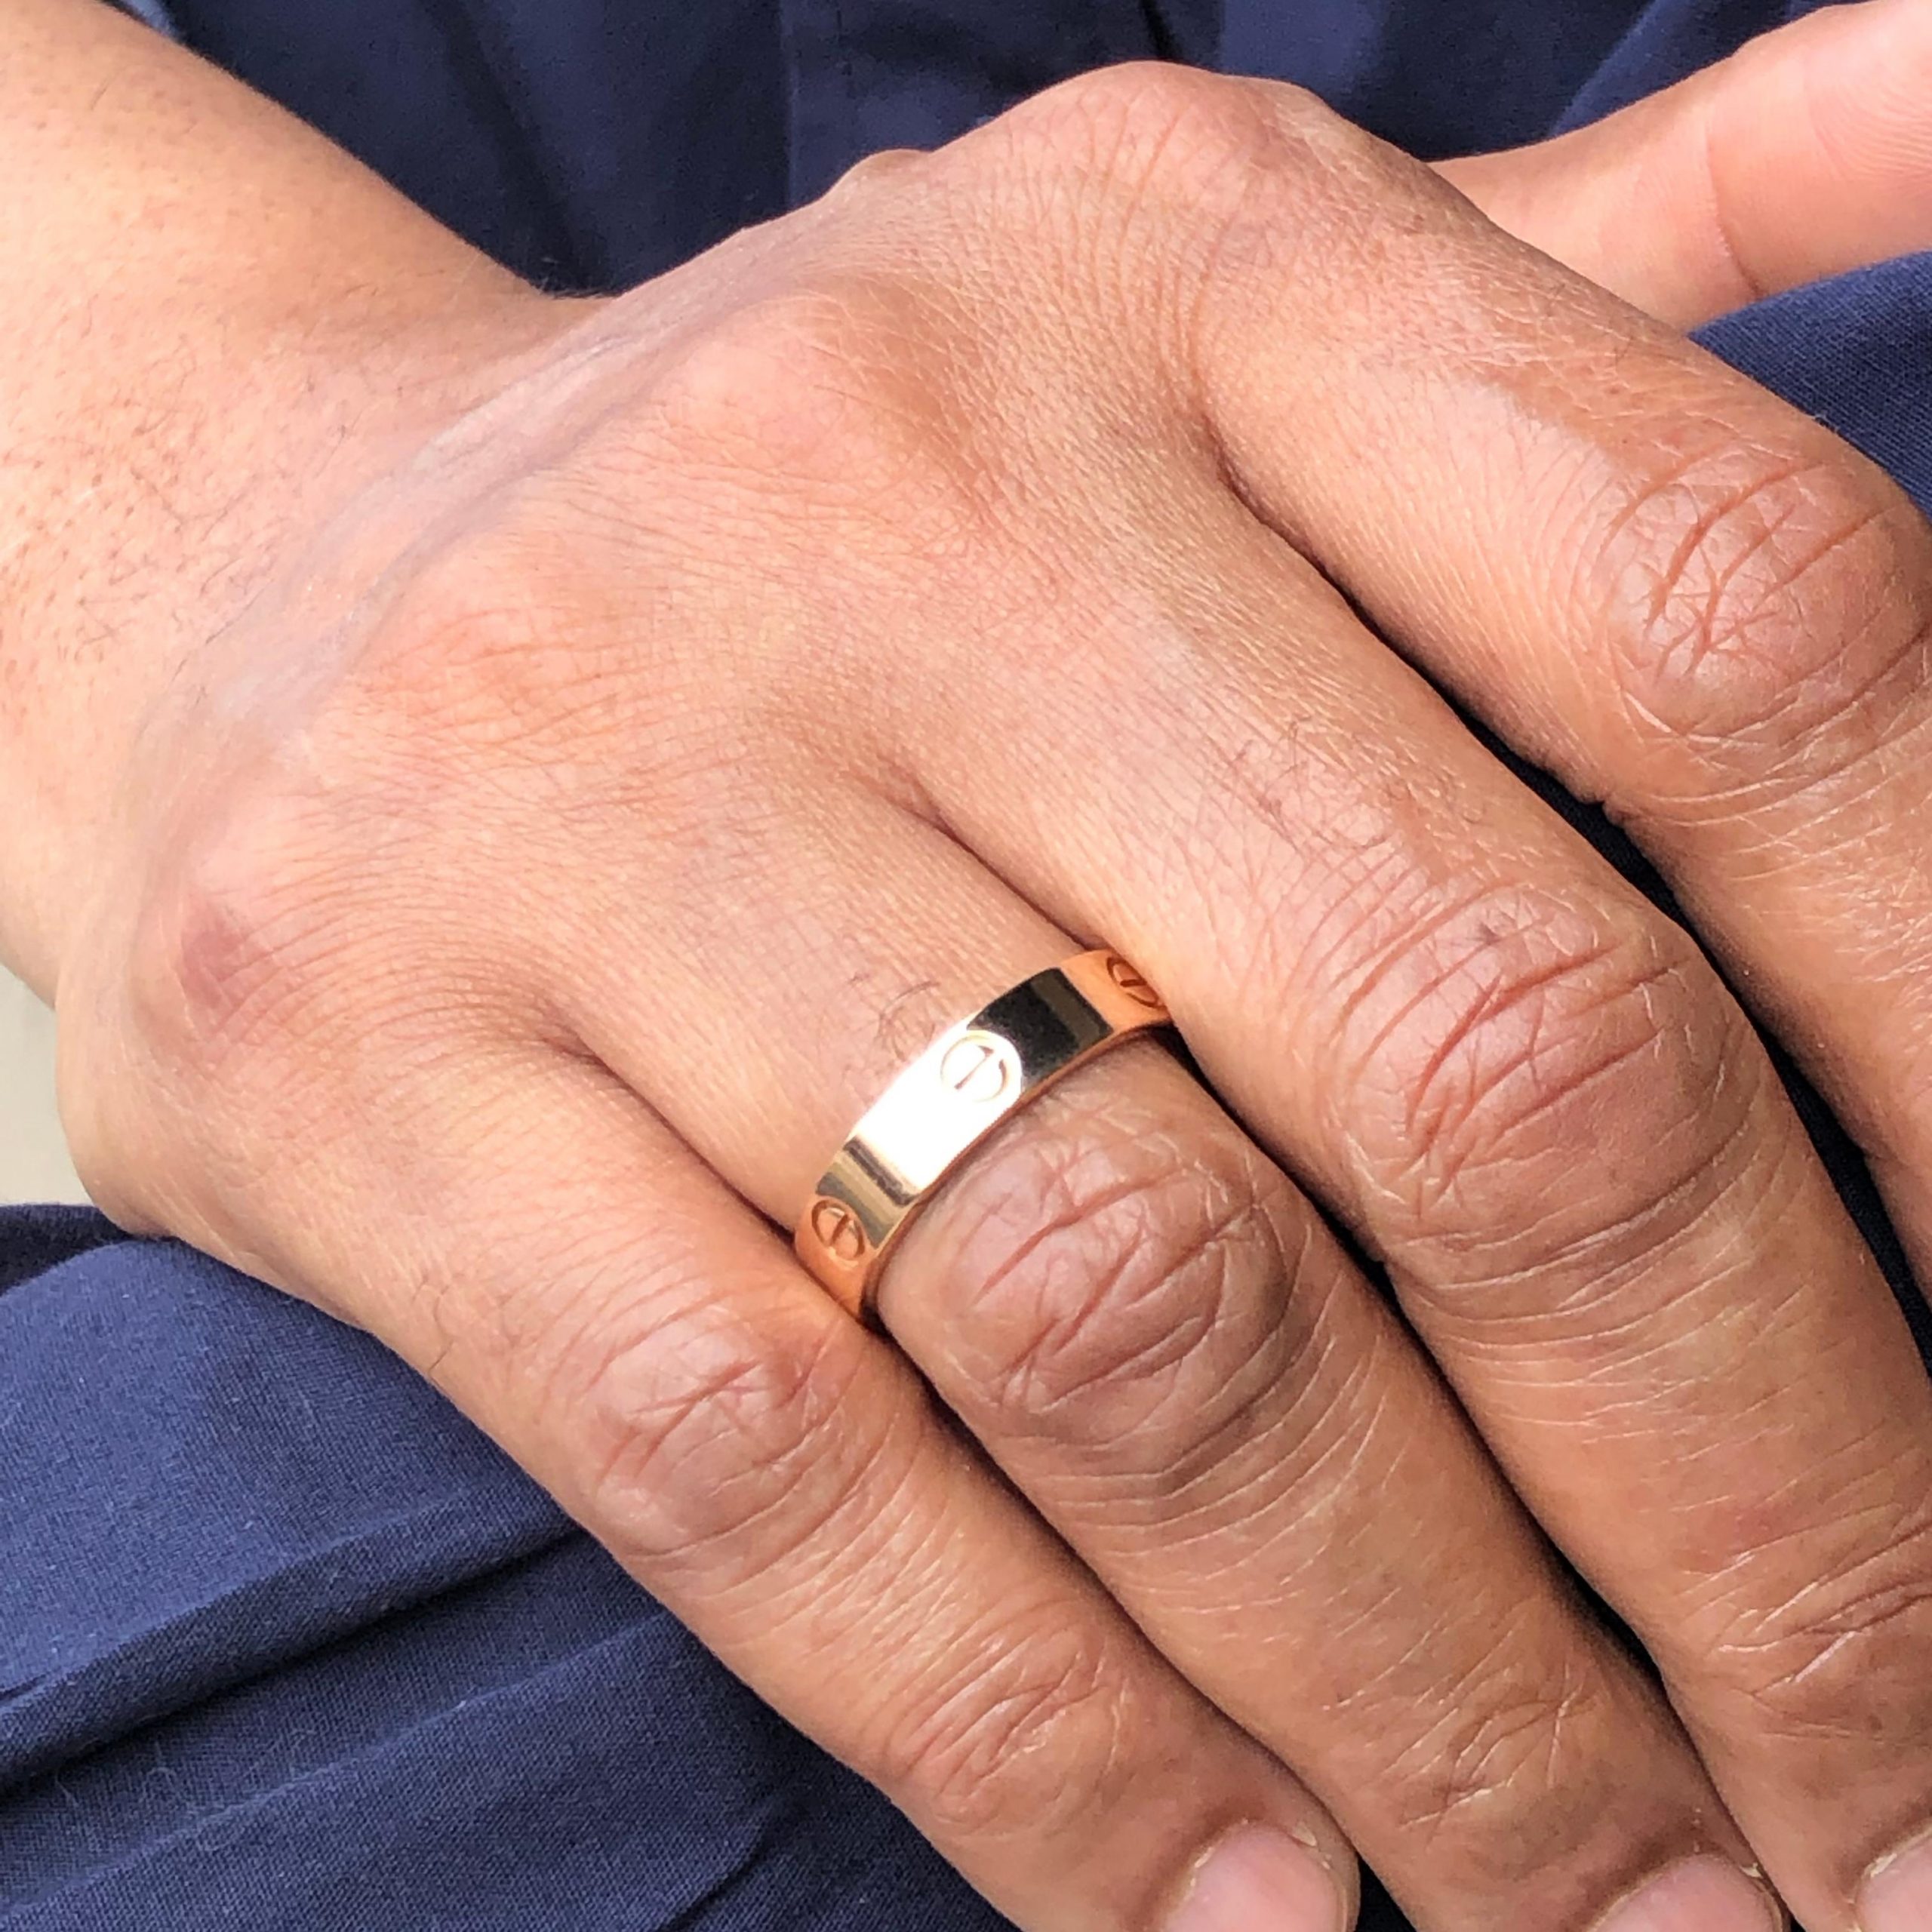 Обручальные кольцо у мужчины на пальце